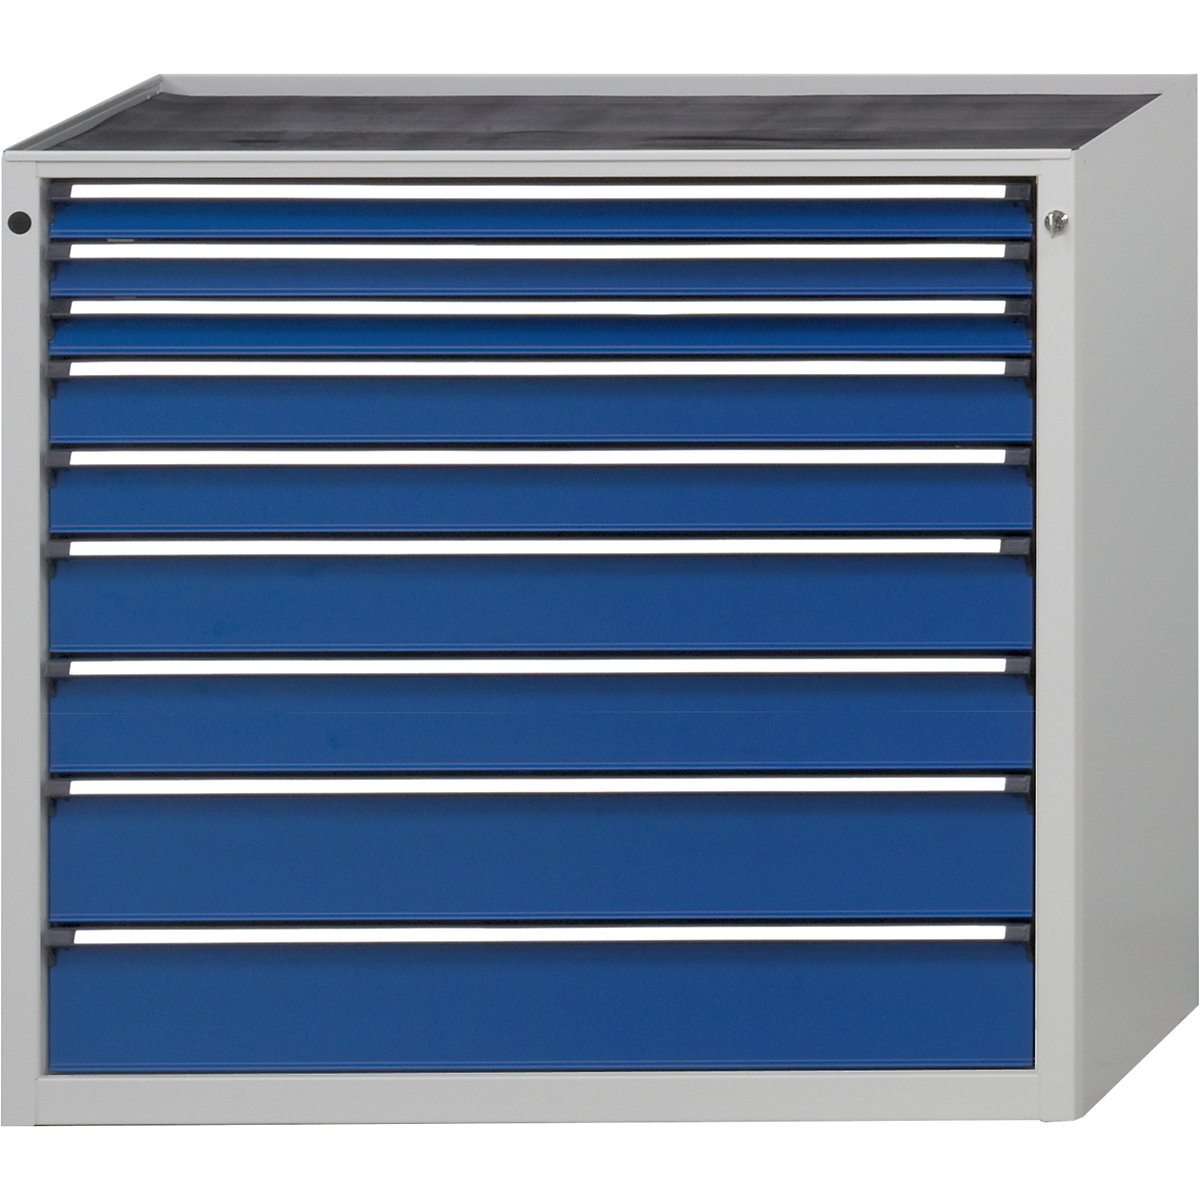 ANKE – Armoire à tiroirs, l x p 1060 x 675 mm, 9 tiroirs, hauteur 980 mm, façade bleu gentiane